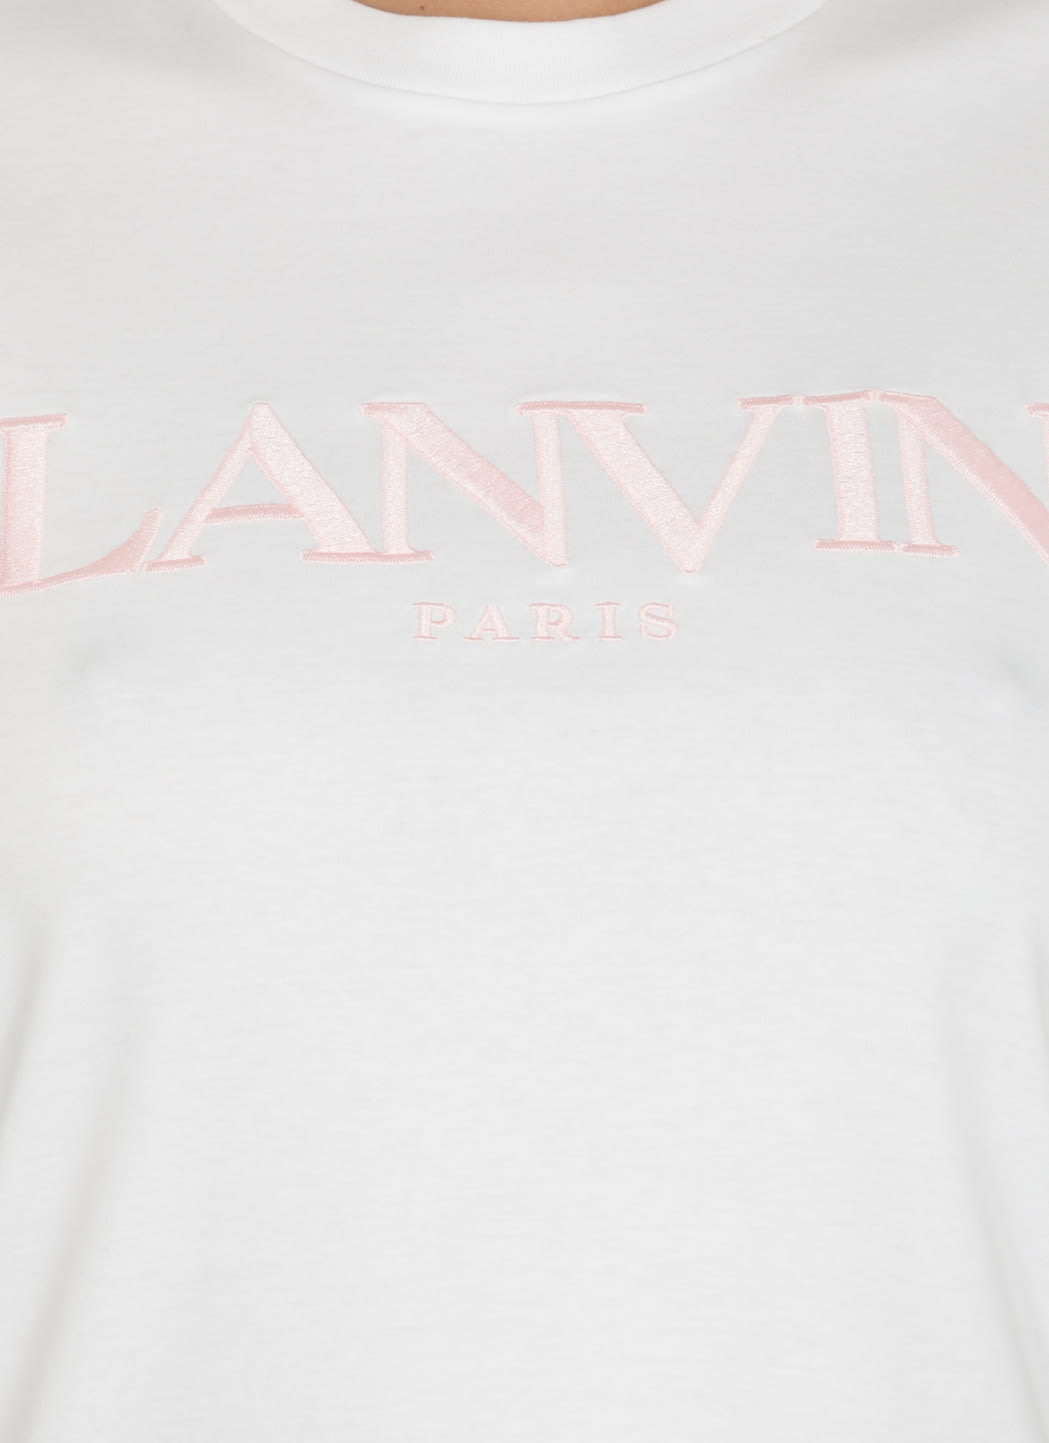 Shop Lanvin Cotton Logoed T-shirt In White